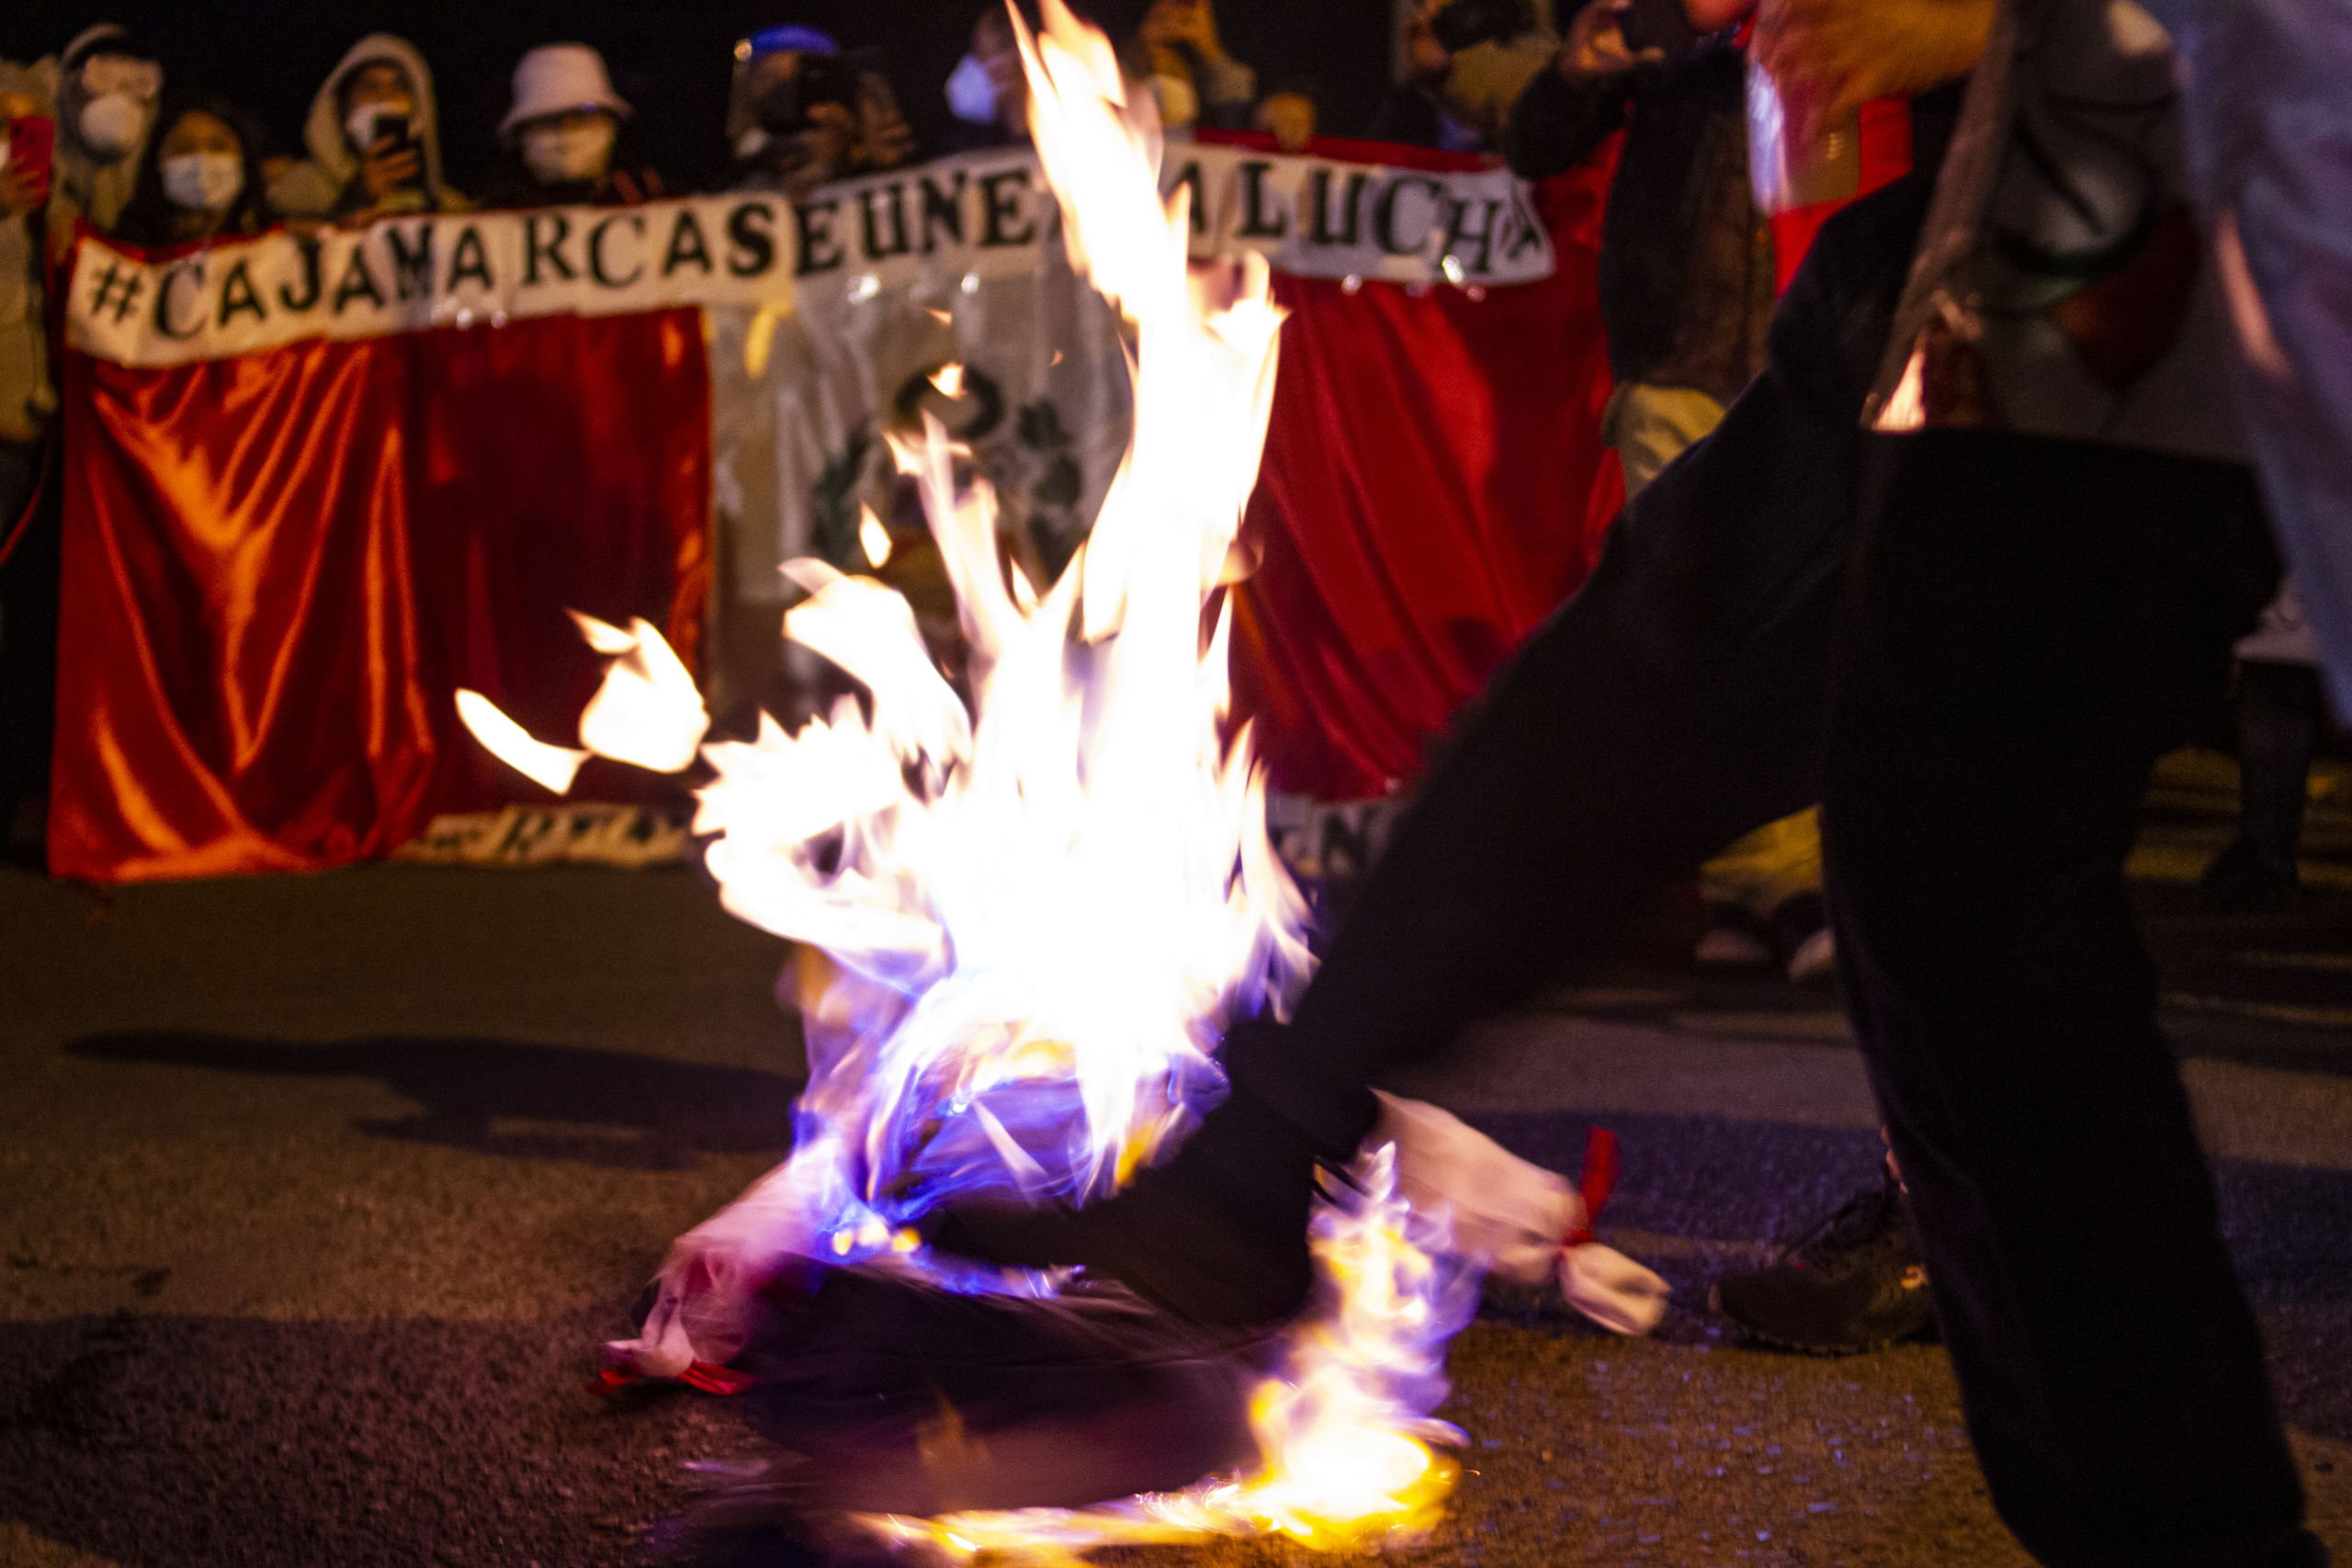 Cajamarca on fire: people in Cajamarca burned a puppet with interim president Merino’s head on it, representing the corrupted political landscape in Peru. Photo: Irma Cabrera Abanto / @irma.cabrera.abanto